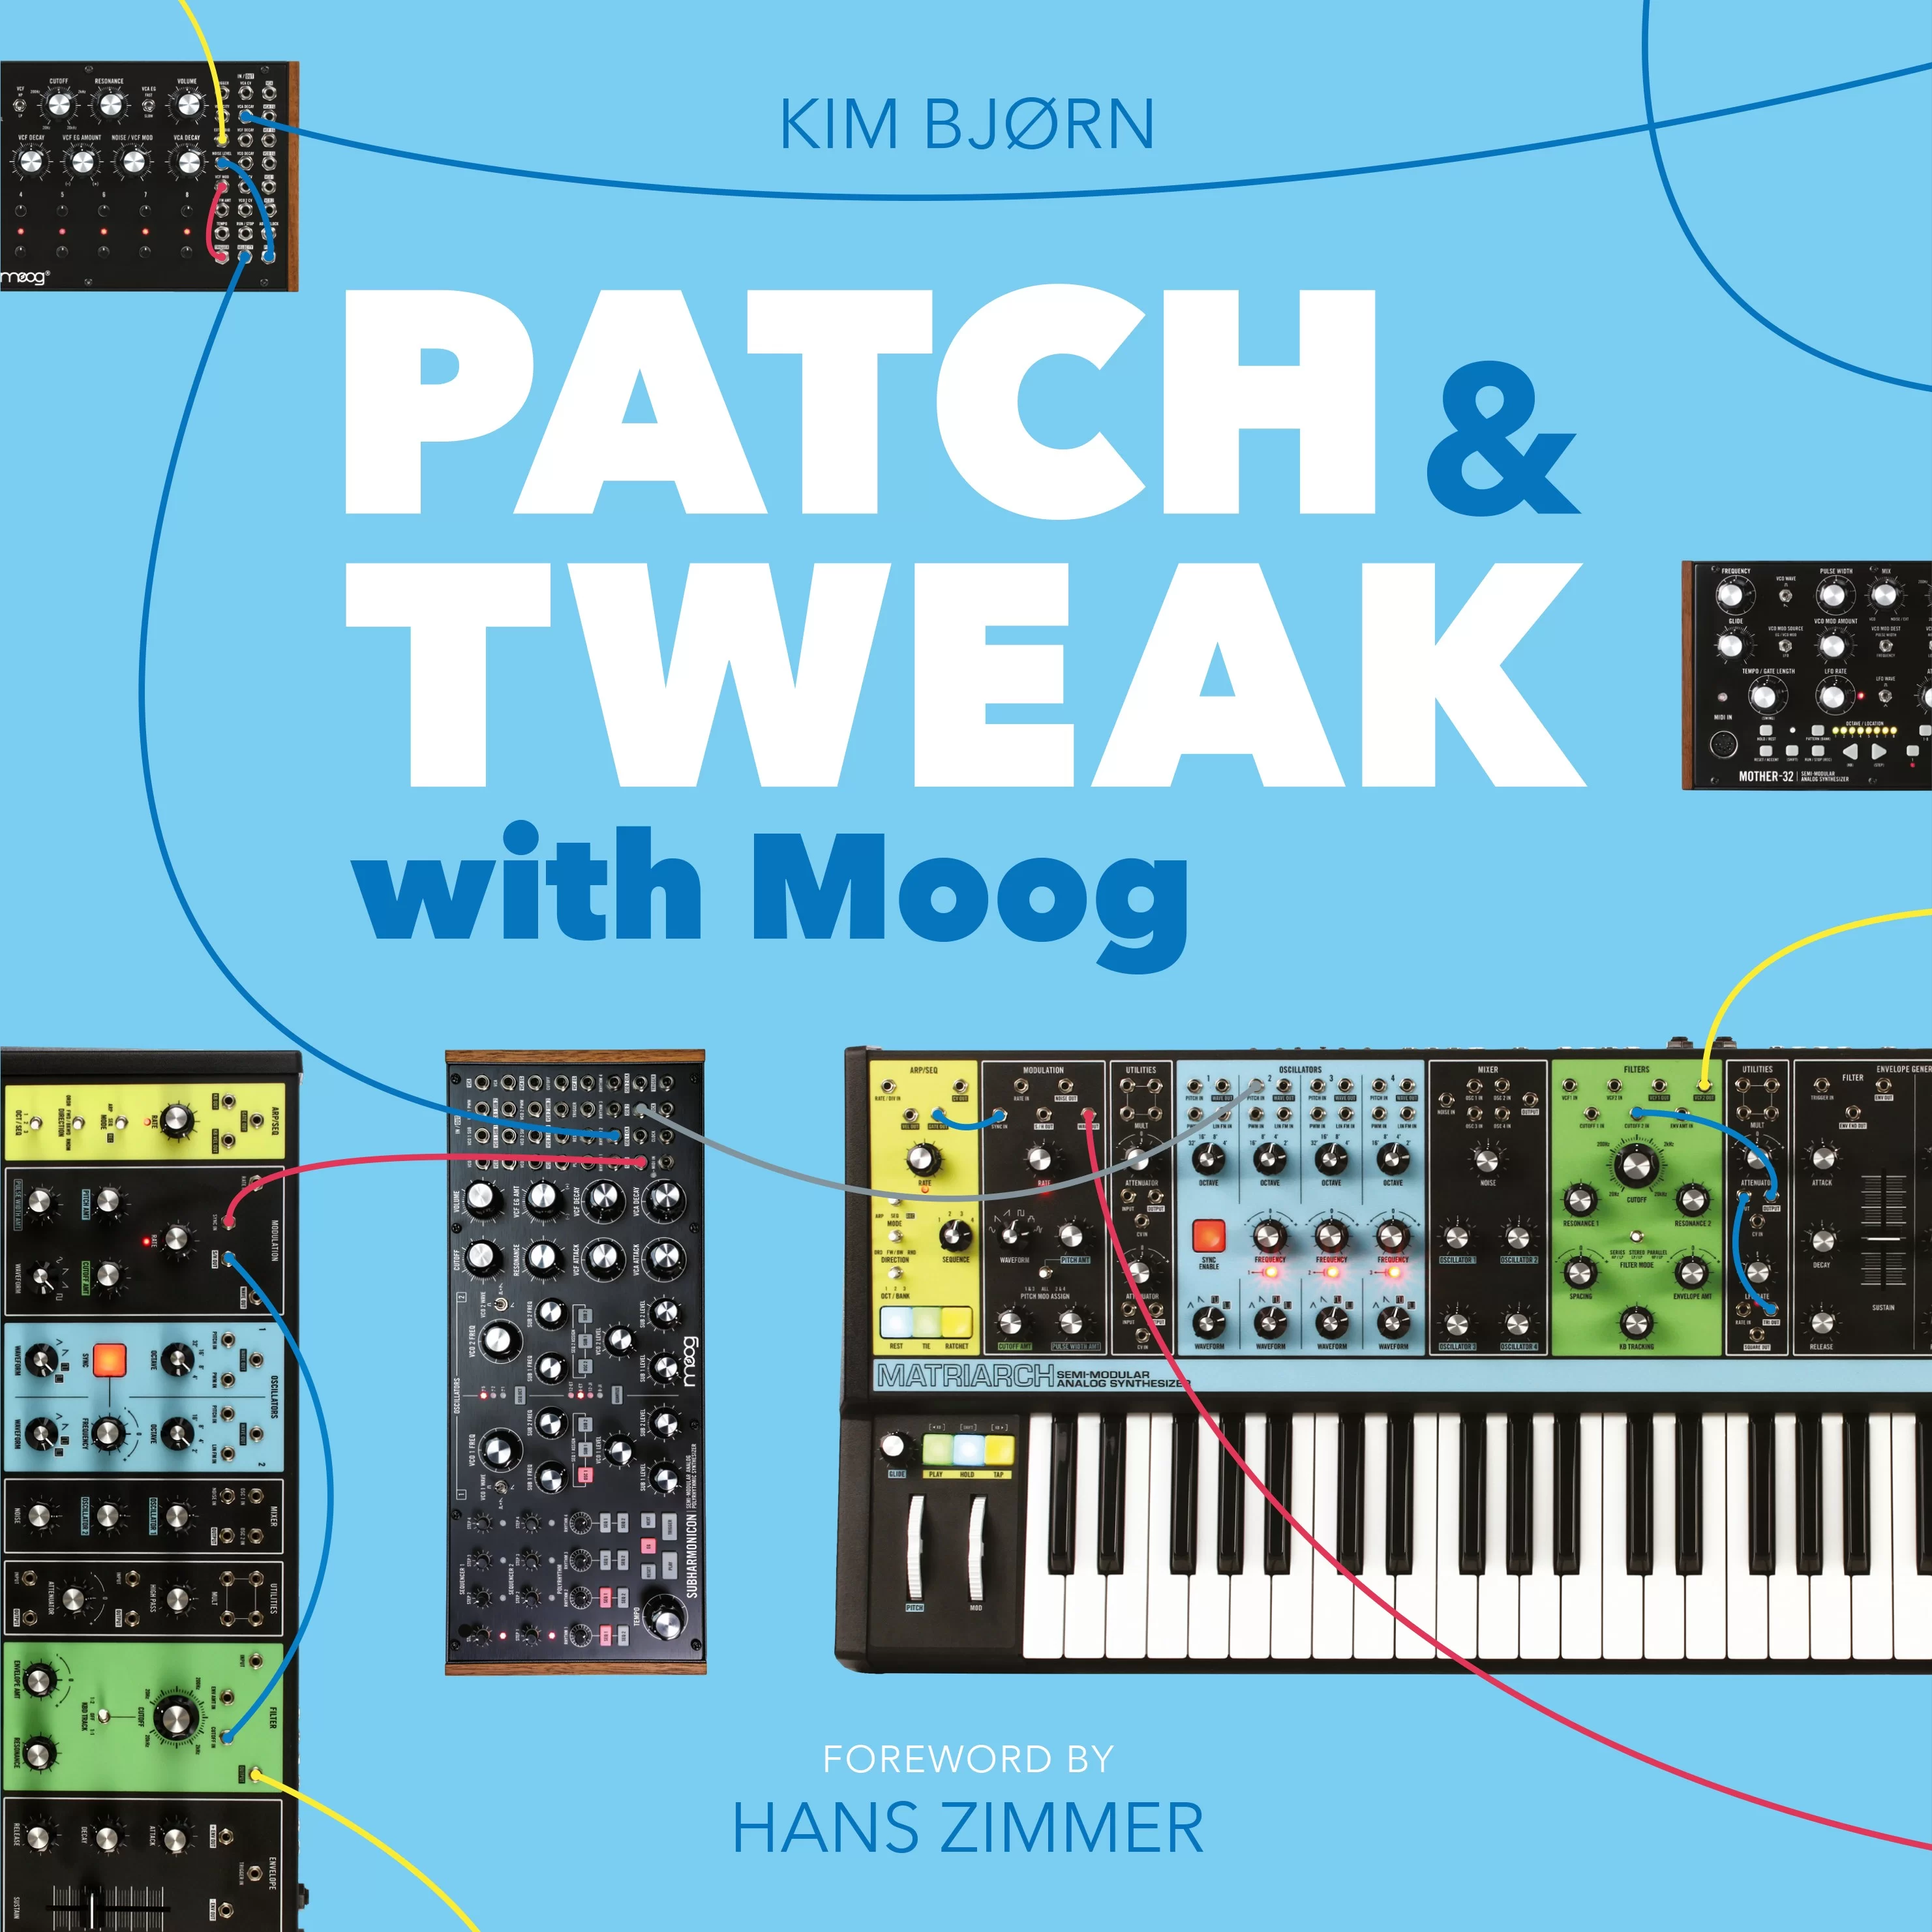 Patch & Tweak with Moog